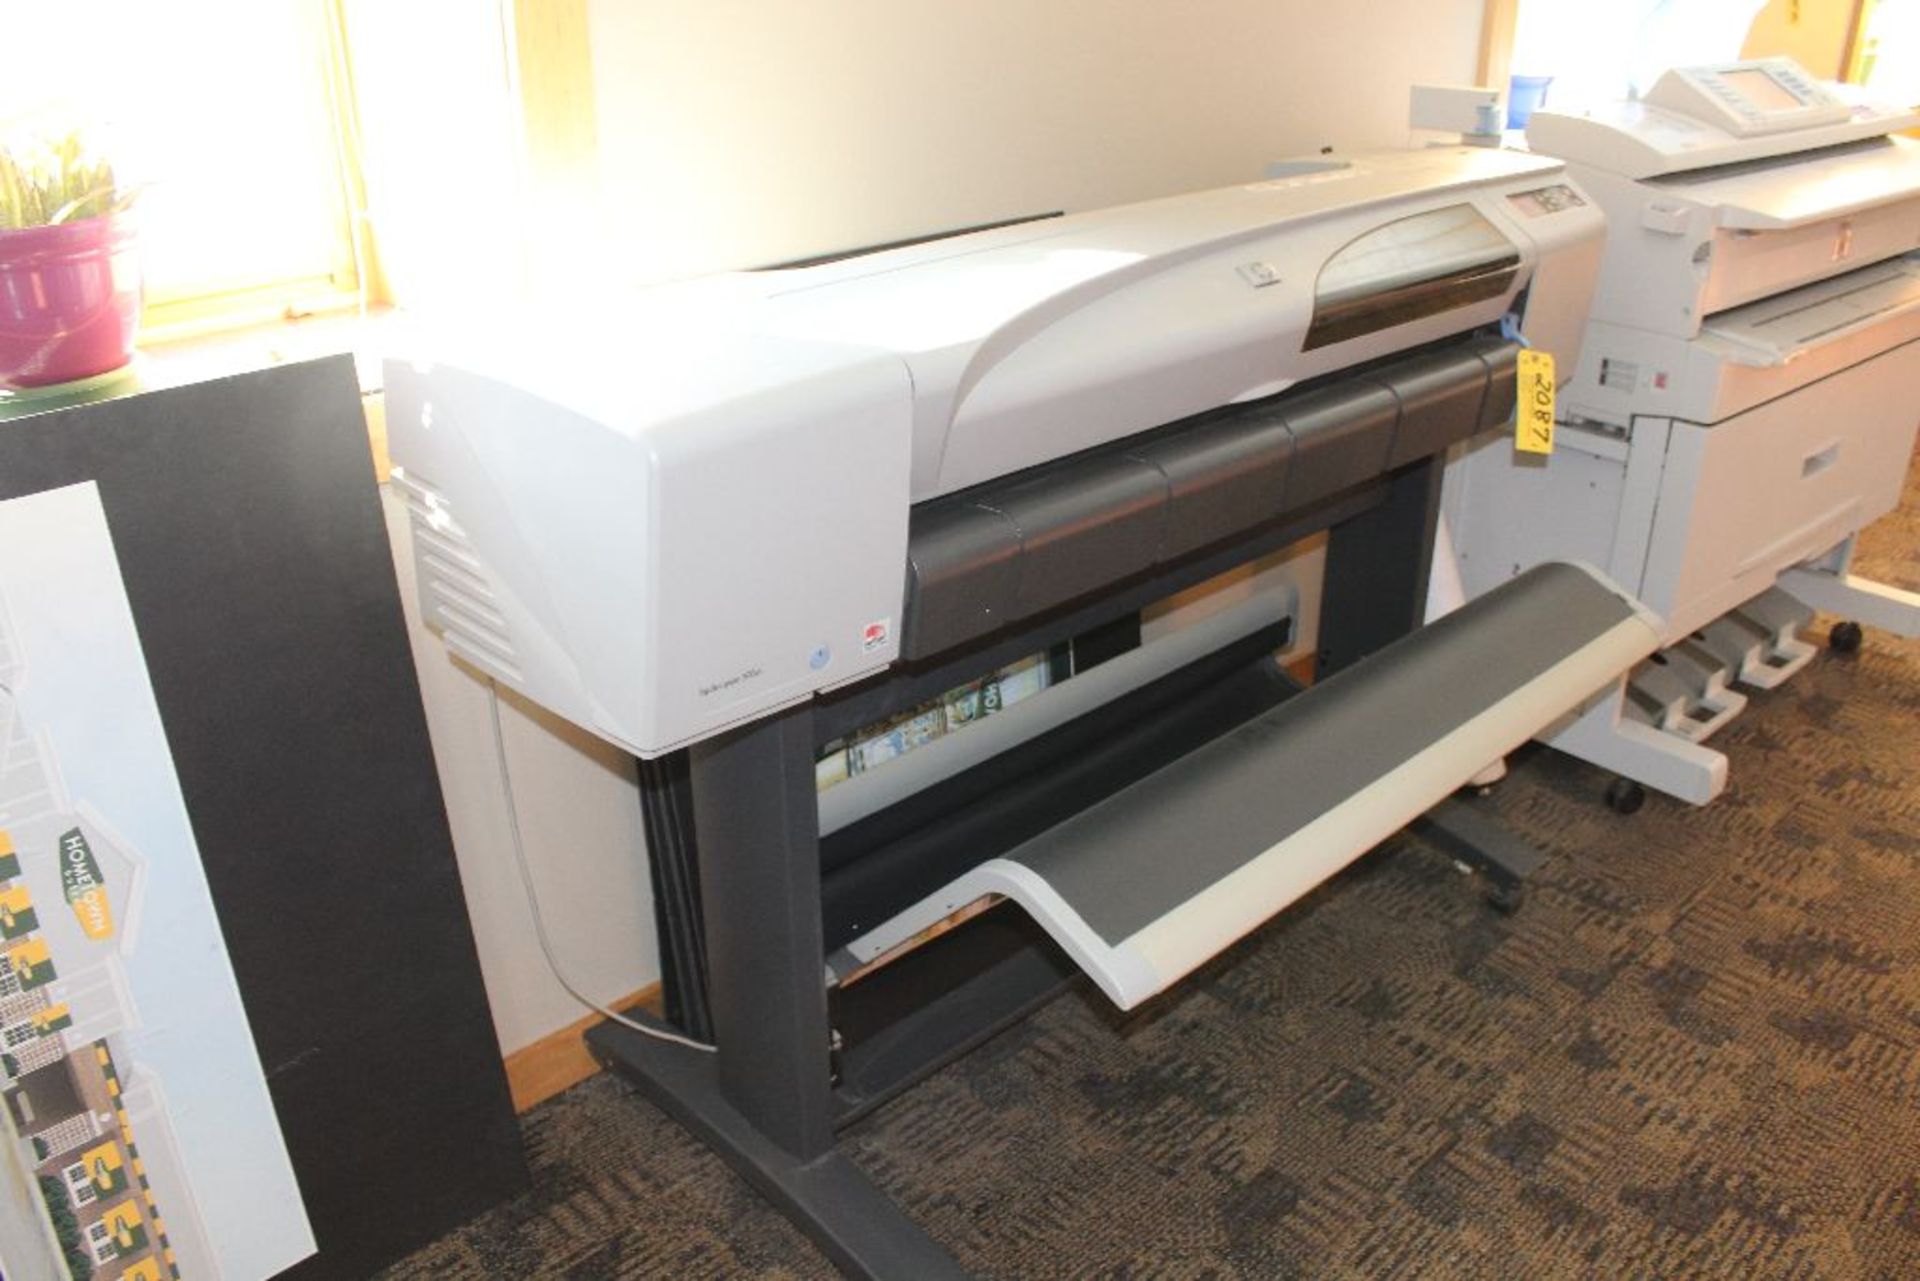 HP design Jet 500PM blue print machine. - Image 3 of 3